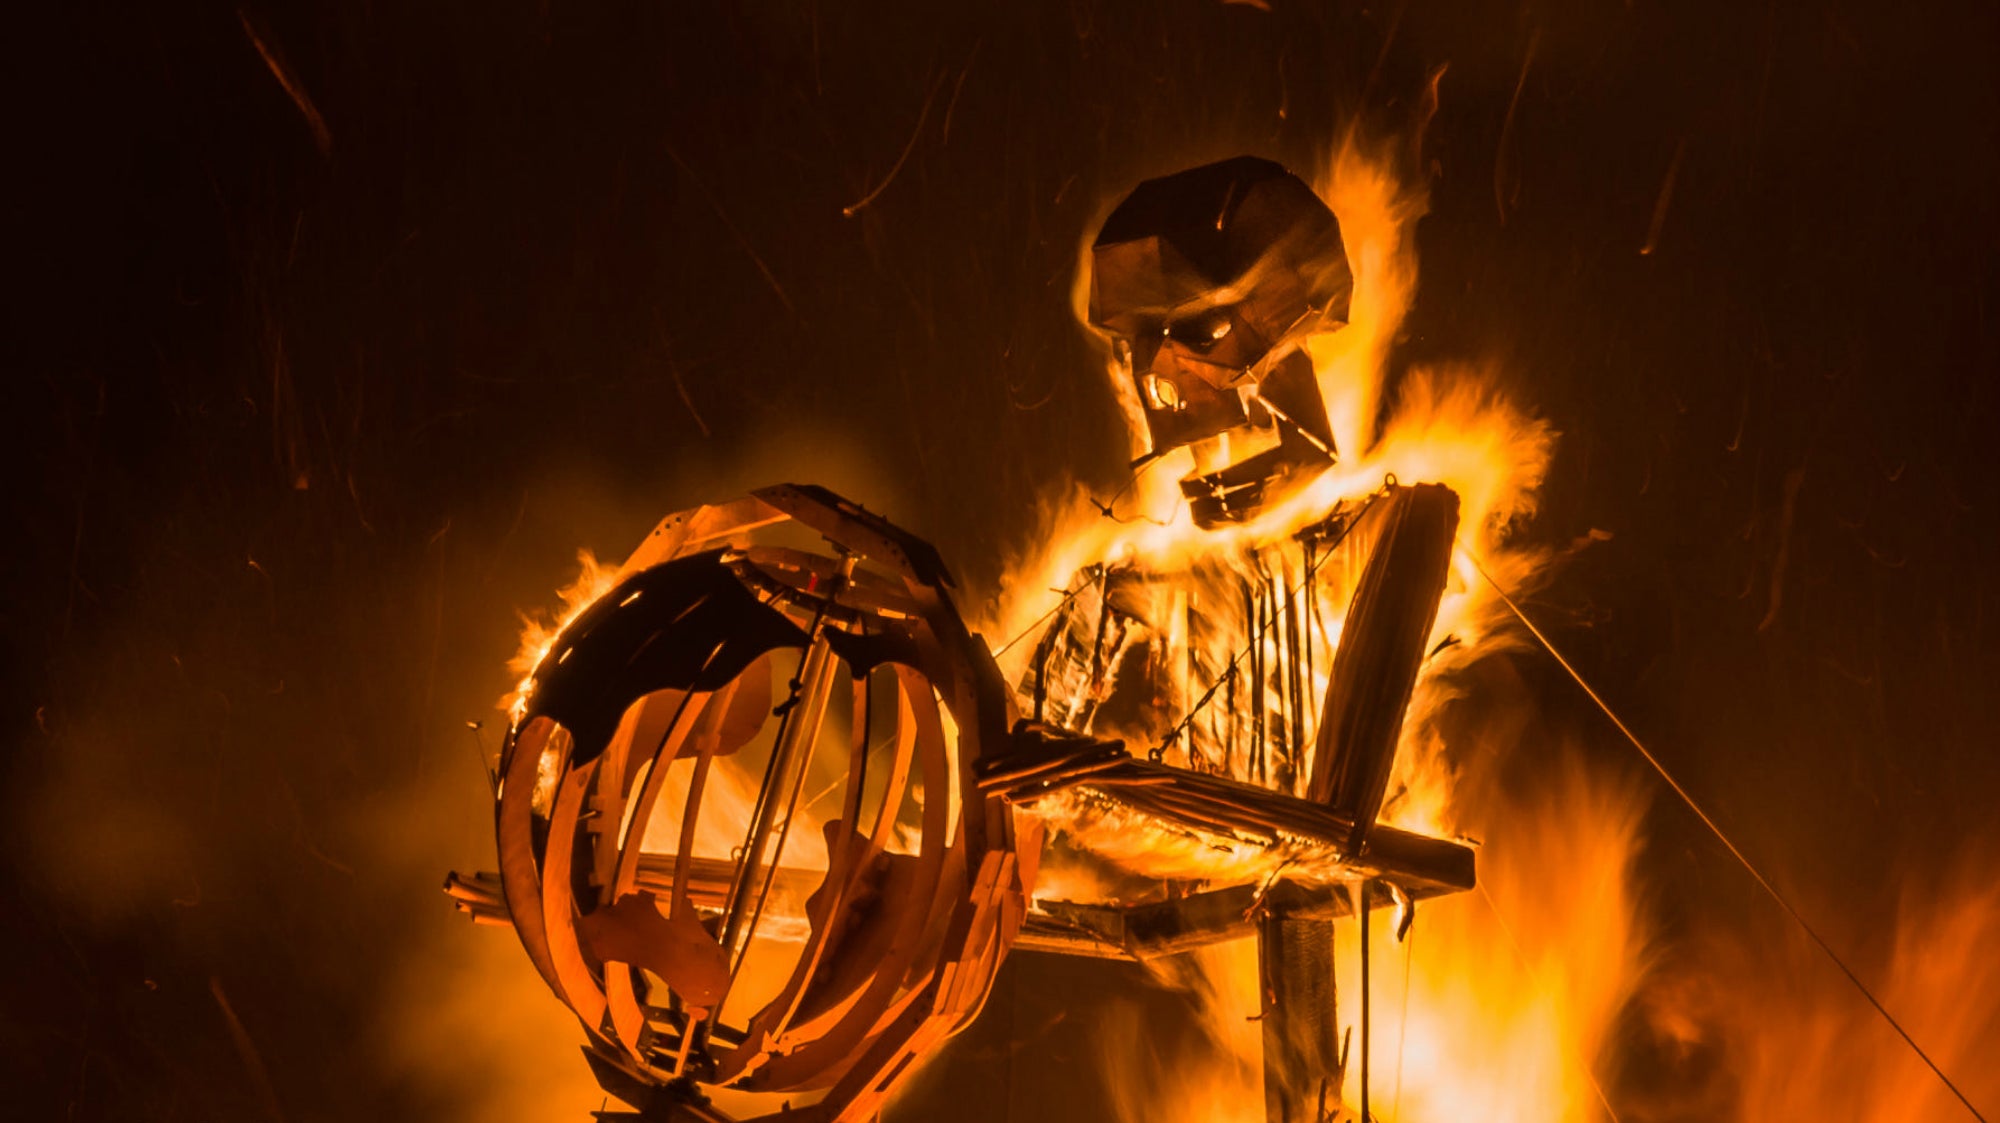 FlameWriter - Glenn Todd's Burning Skull